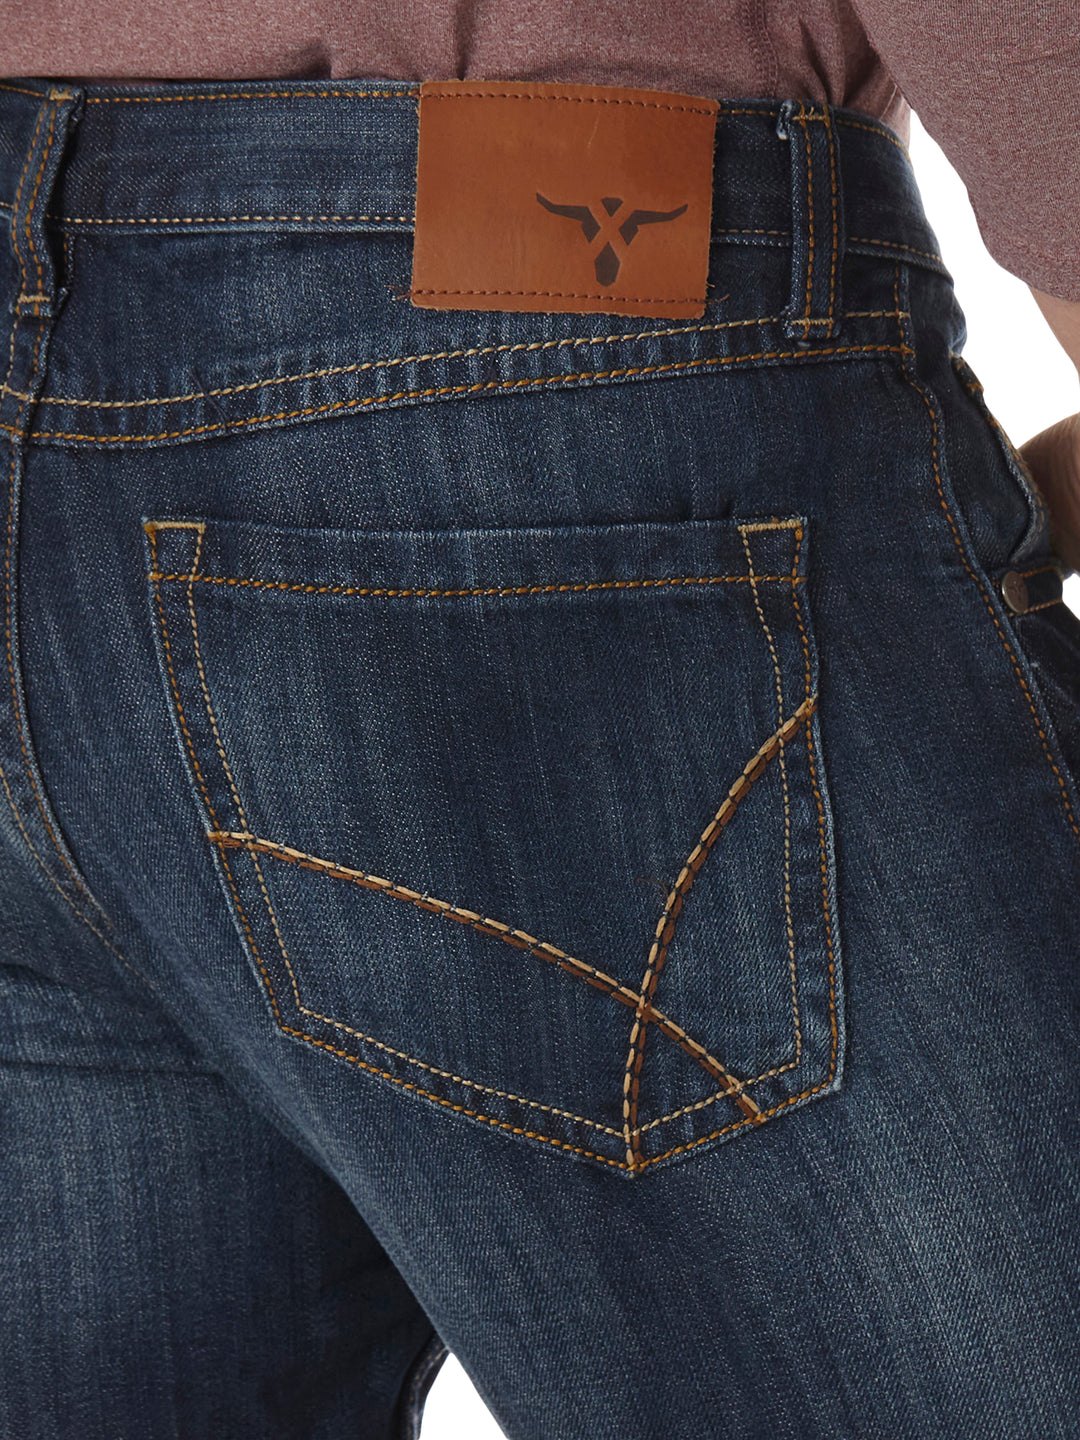 Wrangler Men's River Denim 20X Vintage Bootcut Jean